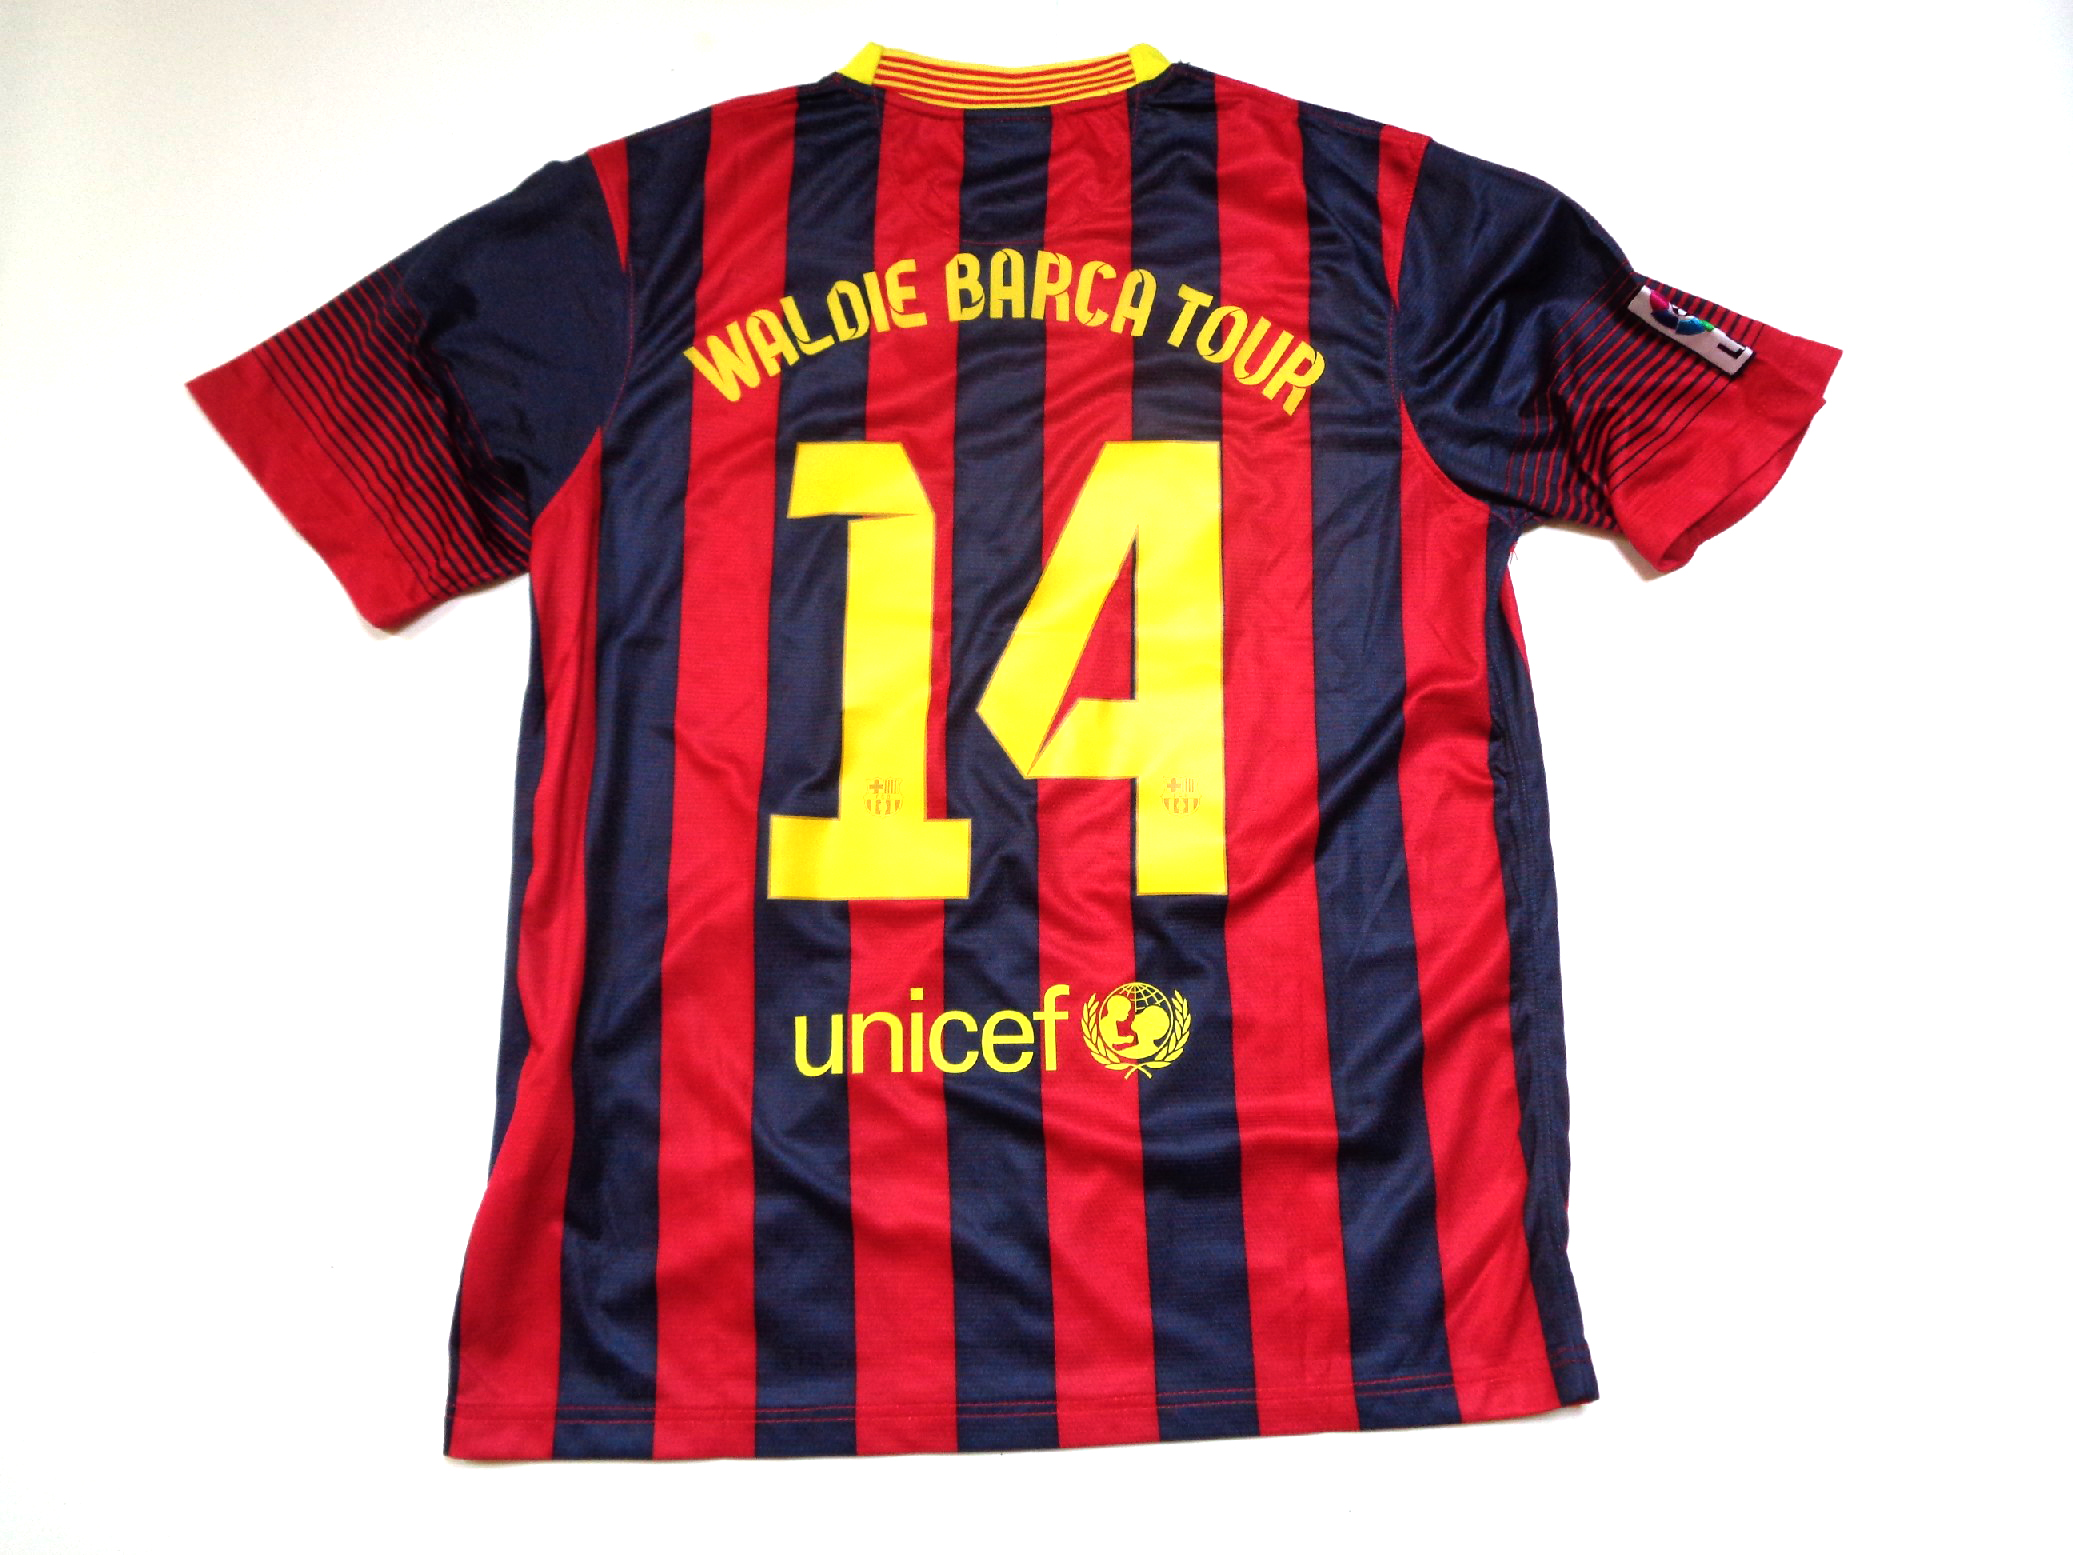 Hypocrite Outgoing Scrutinize 2013/14 BARCELONA FCB Home Football Shirt XL Extra Large Adidas #14 Barca  Tour | vintage clothes & football shirts